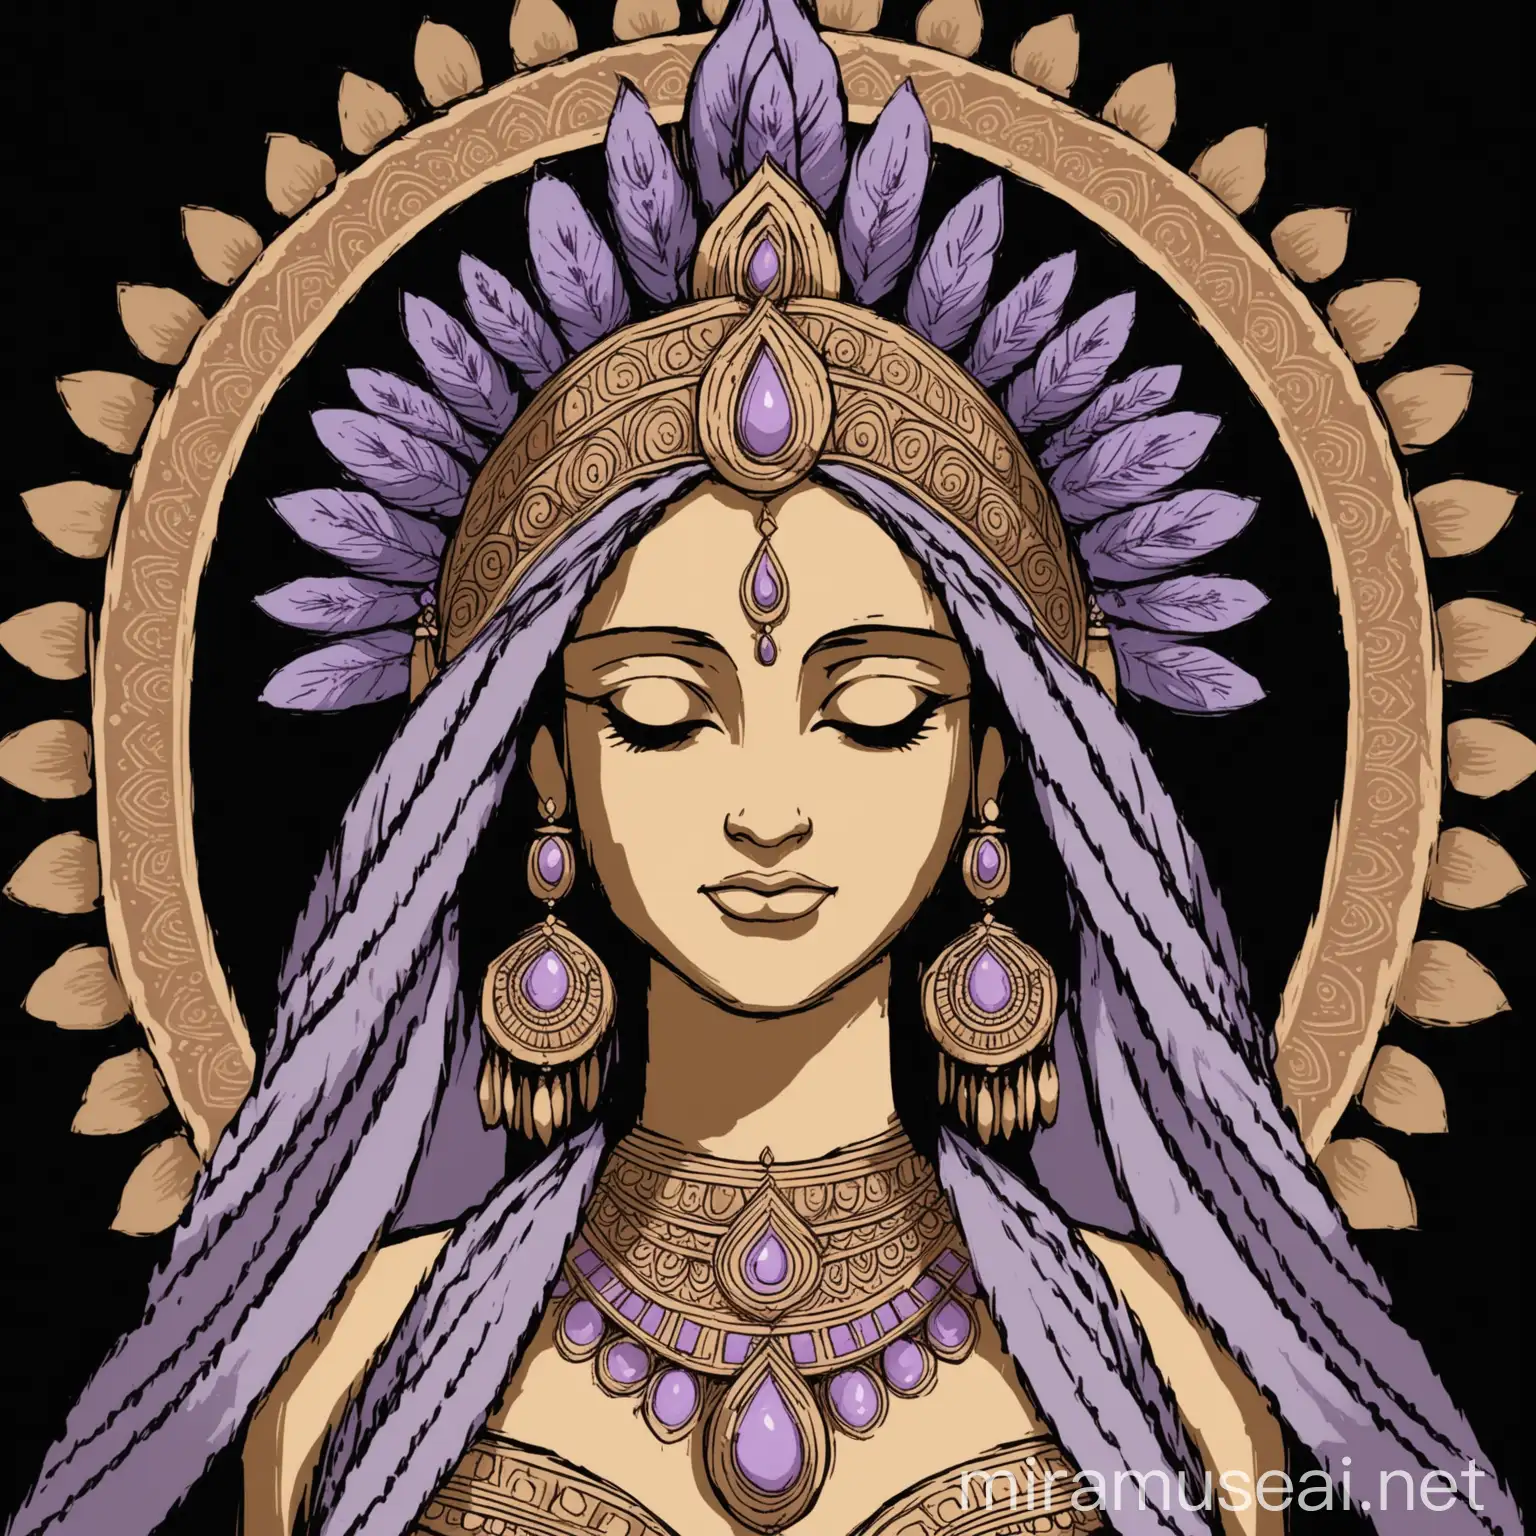 Indian Style Goddess Portrait on Black Background